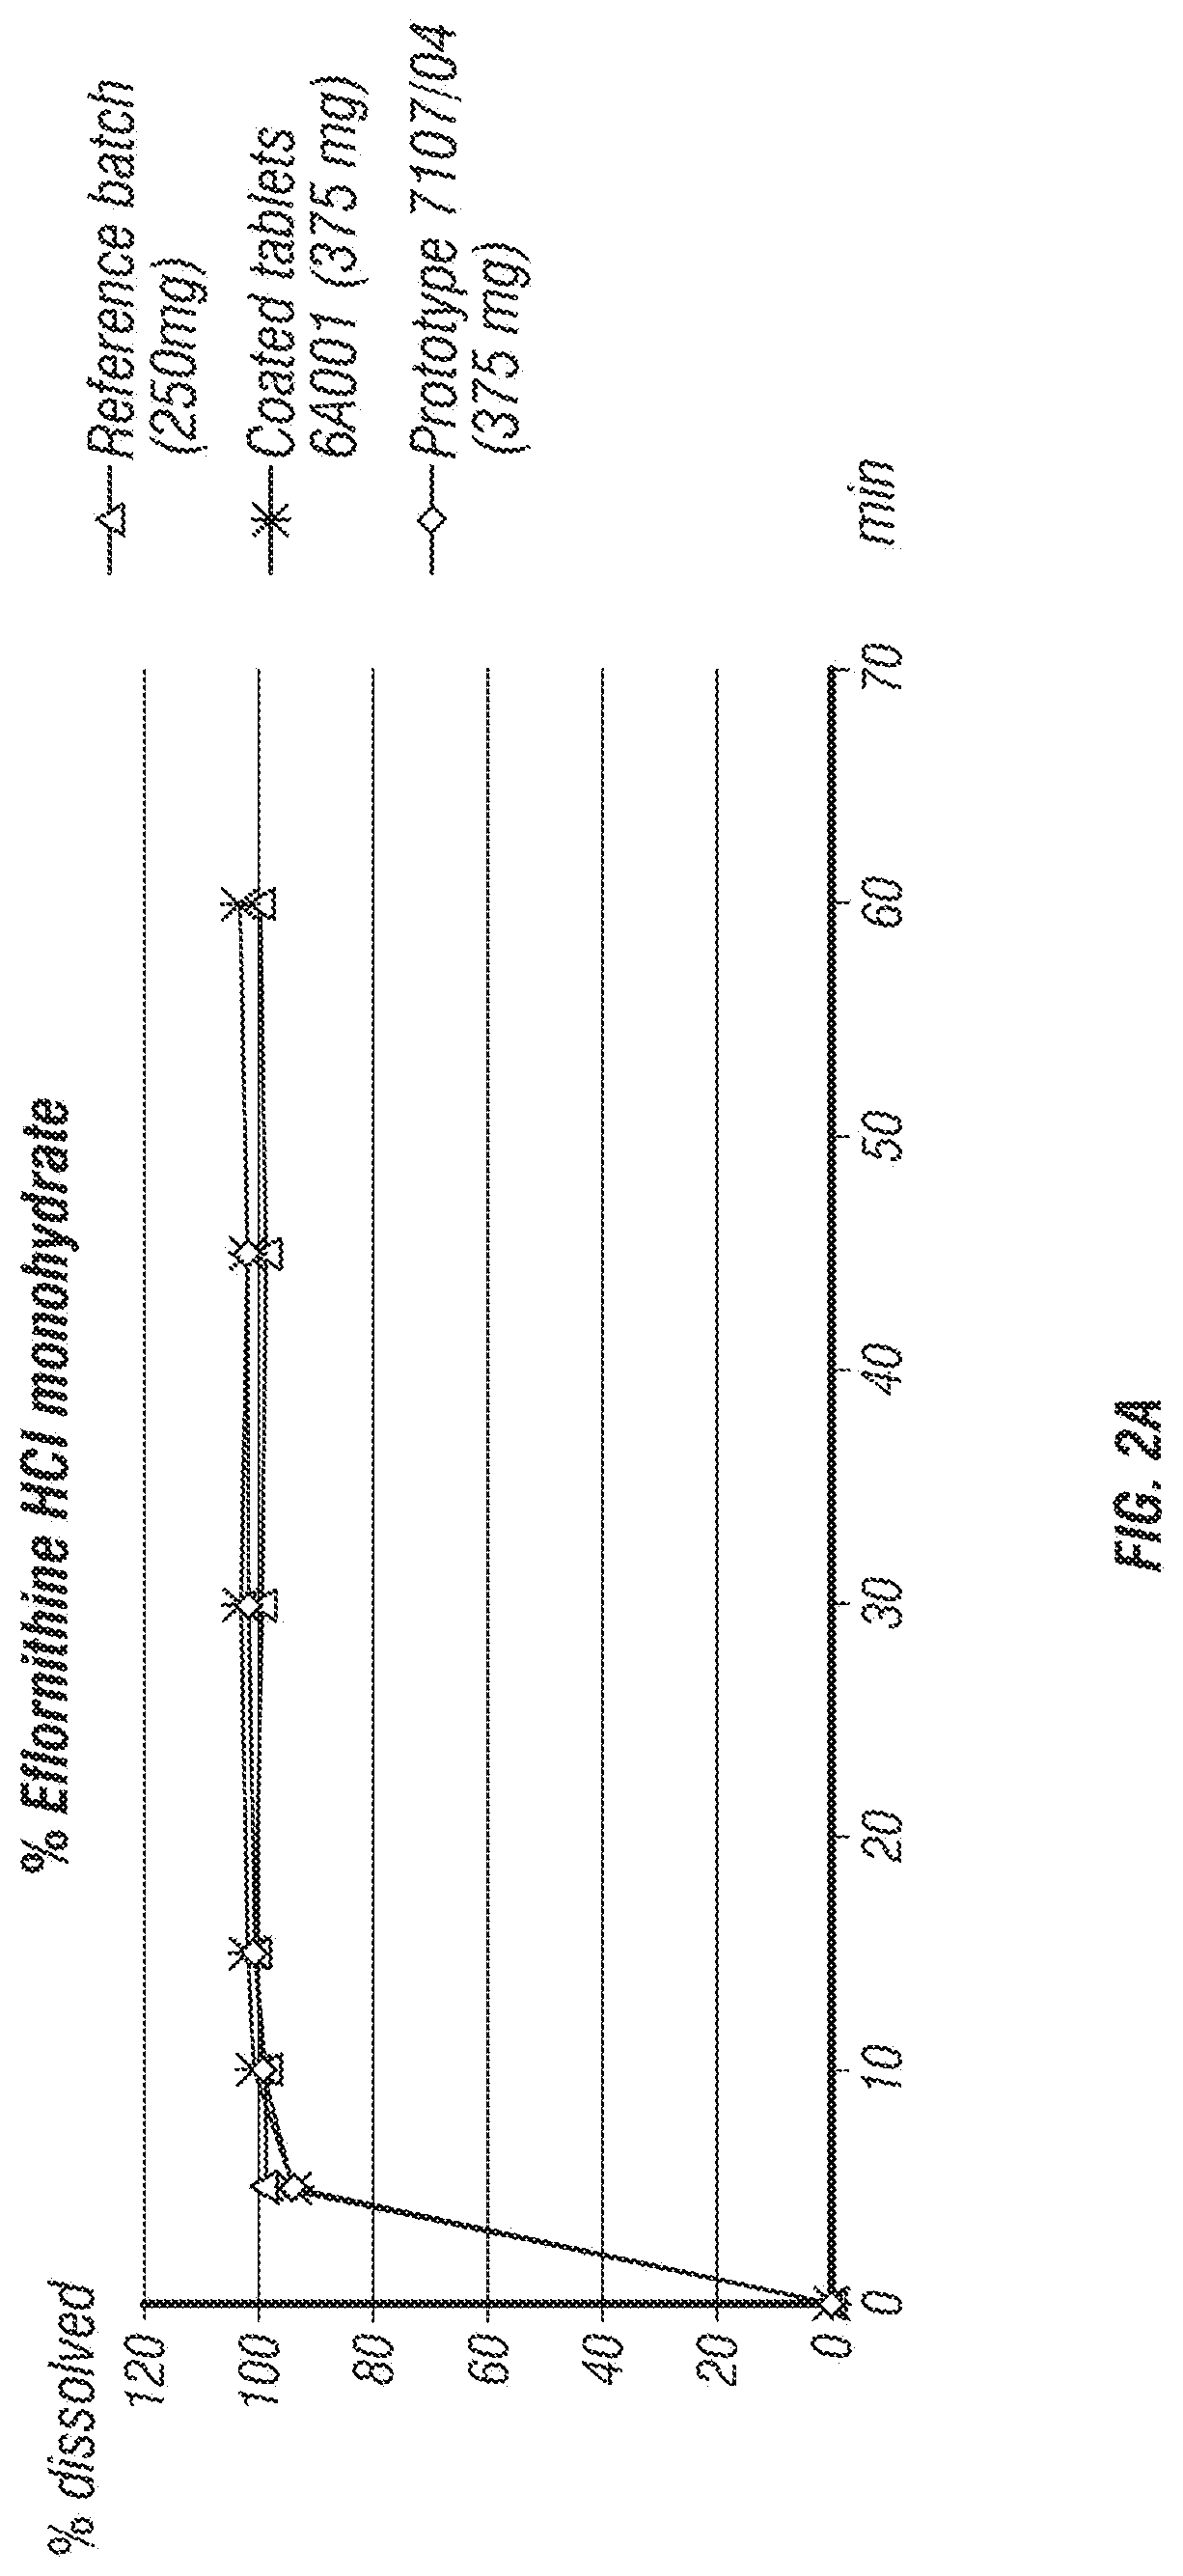 Eflornithine and sulindac, fixed dose combination formulation